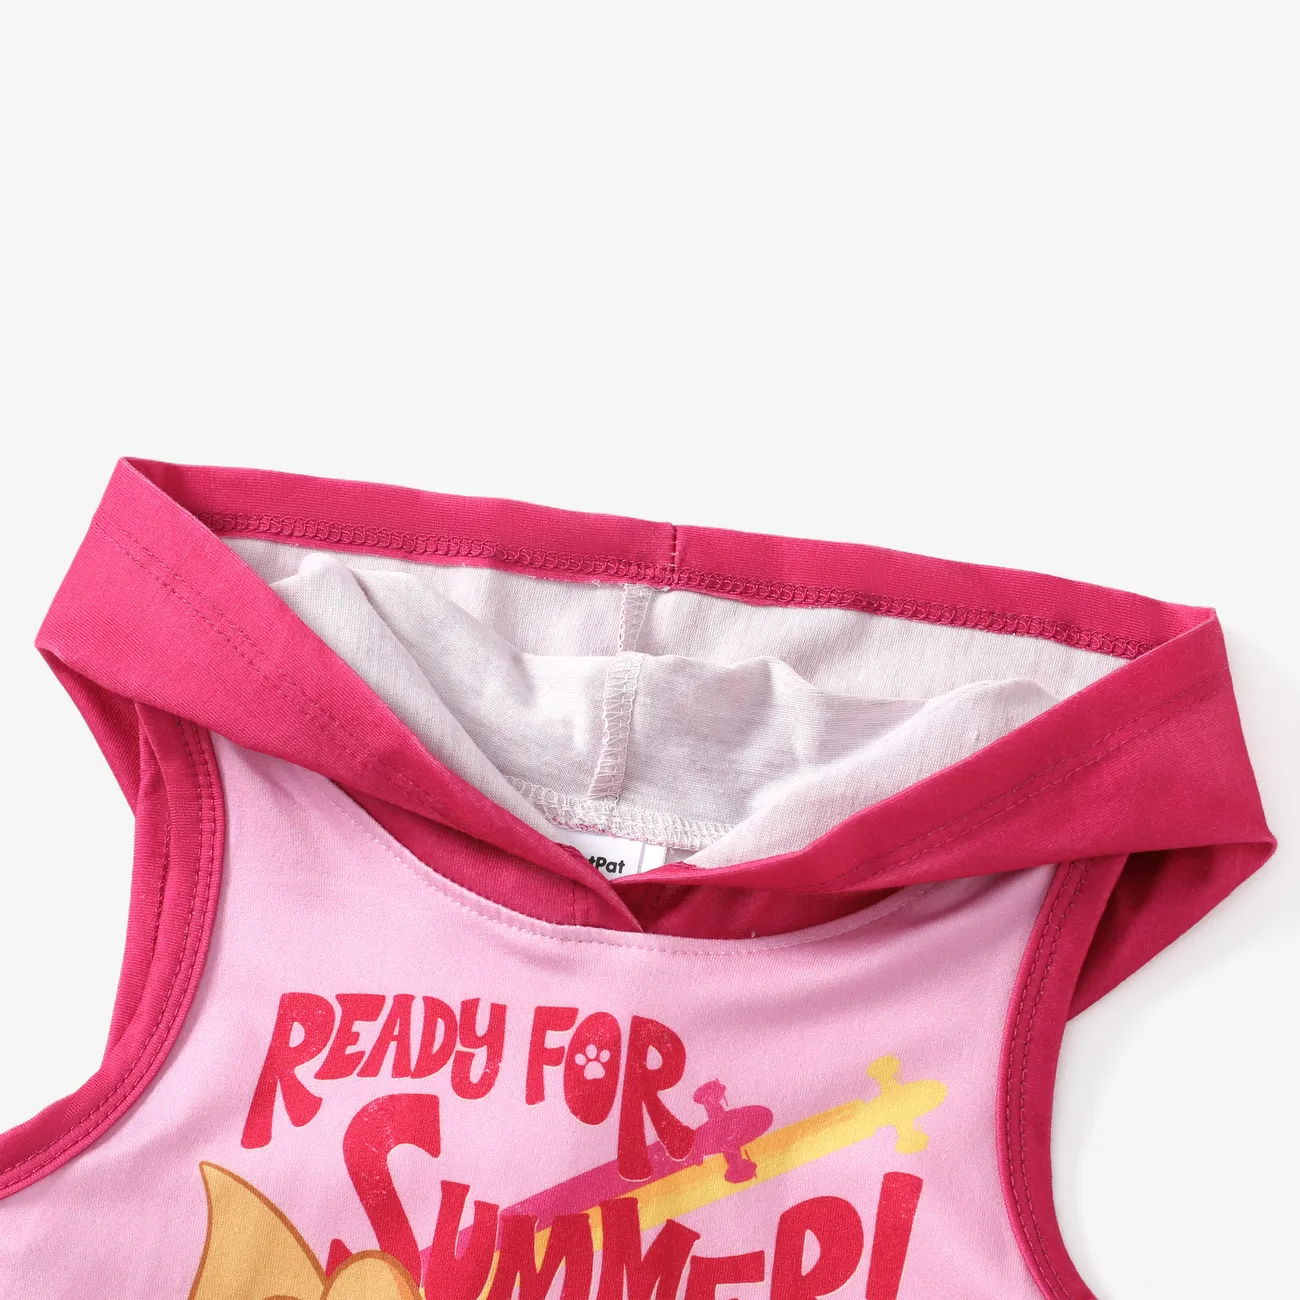 Paw Patrol Toddler Boys/Girls 1pc Character Print Summer Hooded Top Pink big image 1